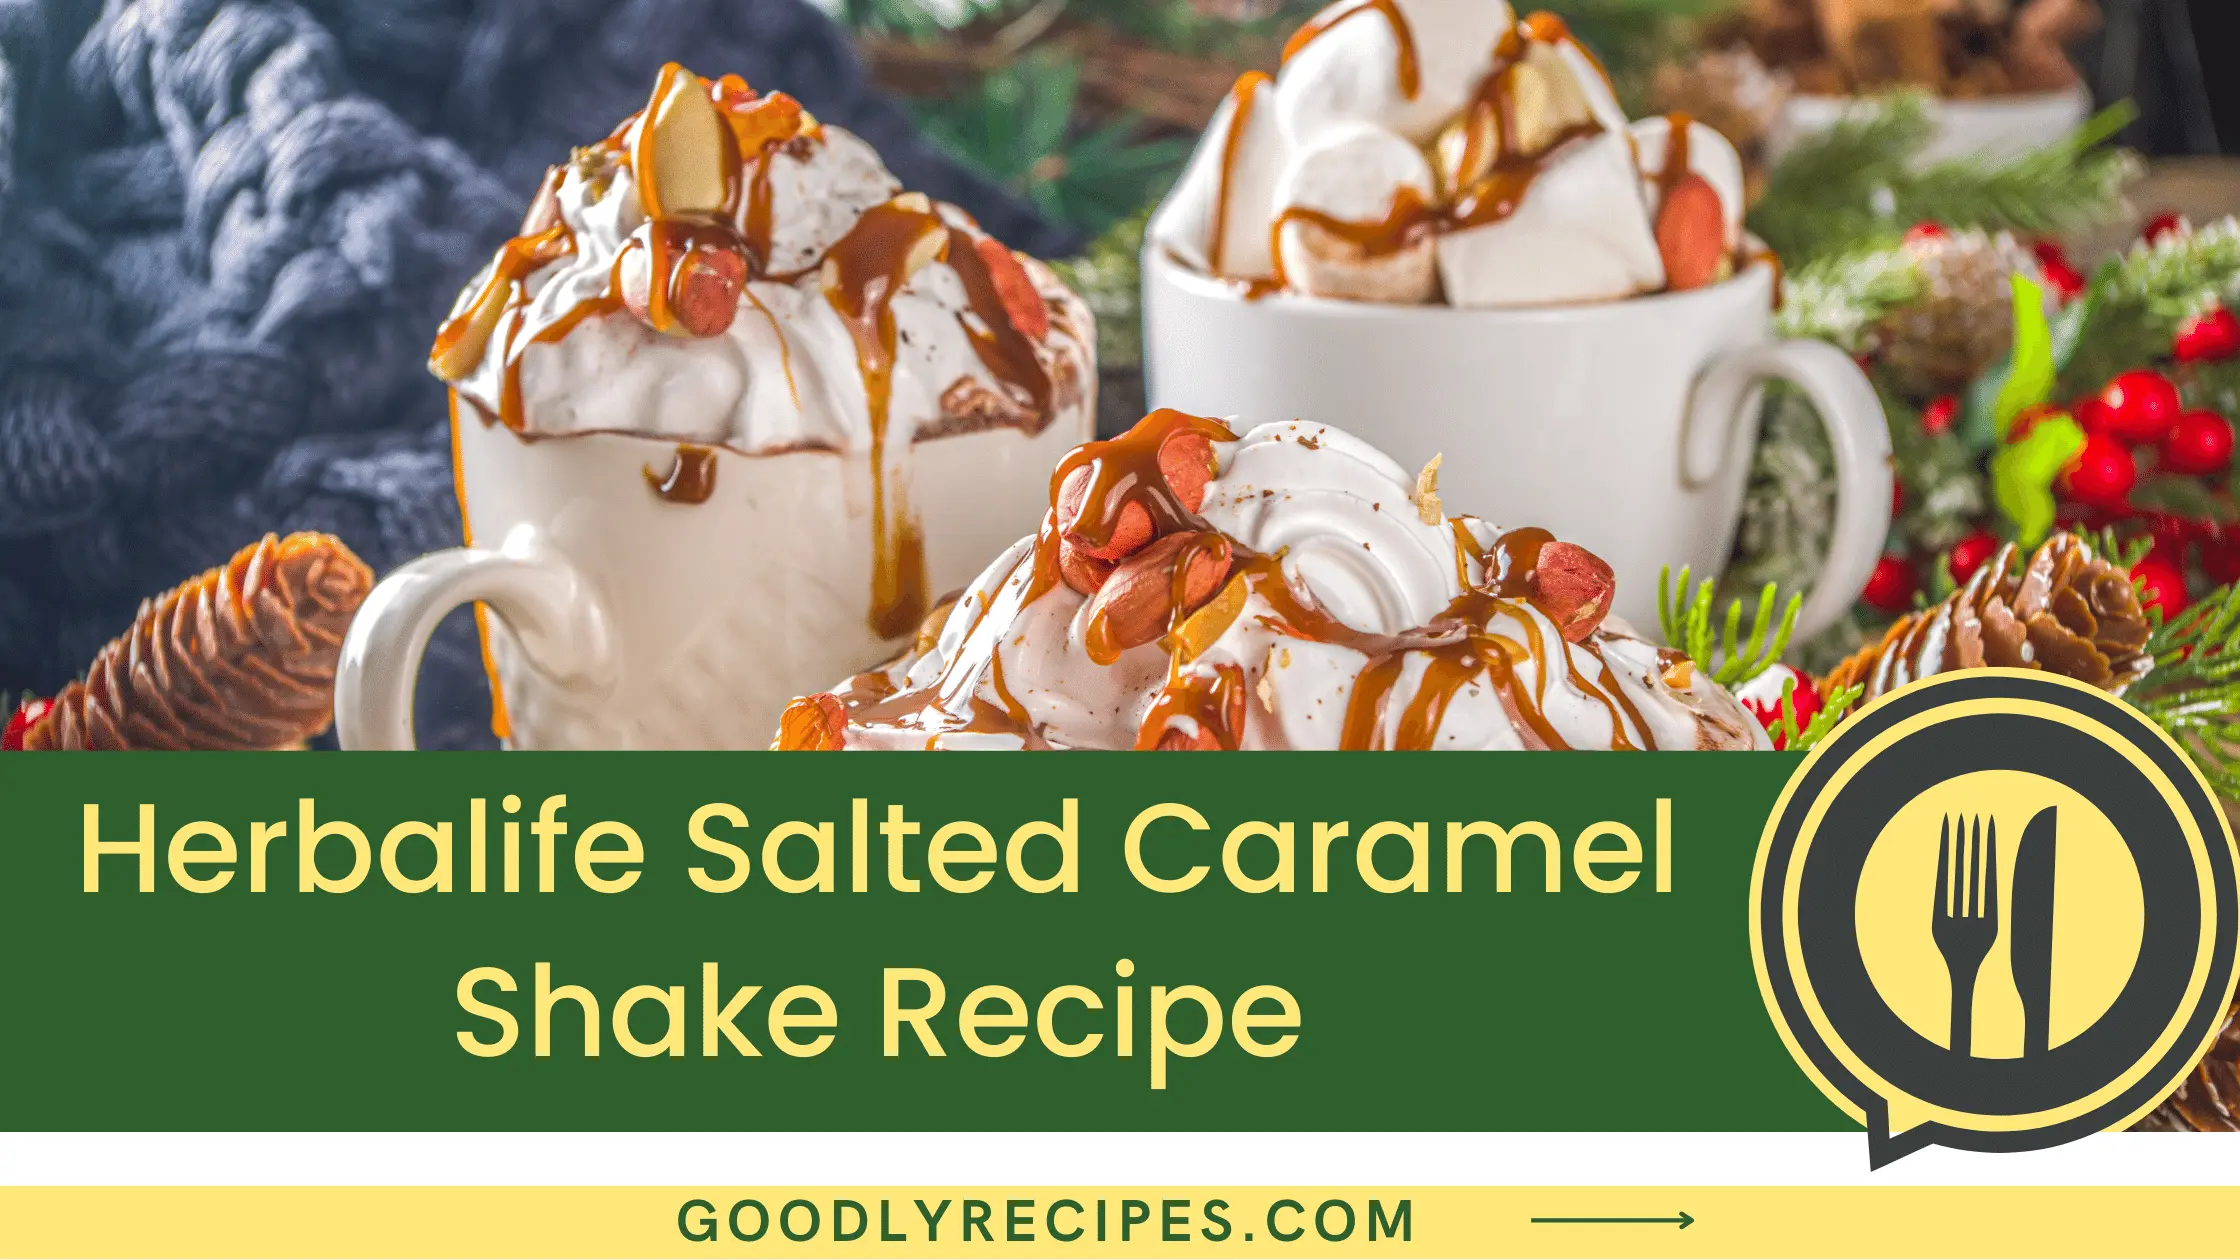 Herbalife Salted Caramel Shake Recipe - For Food Lovers